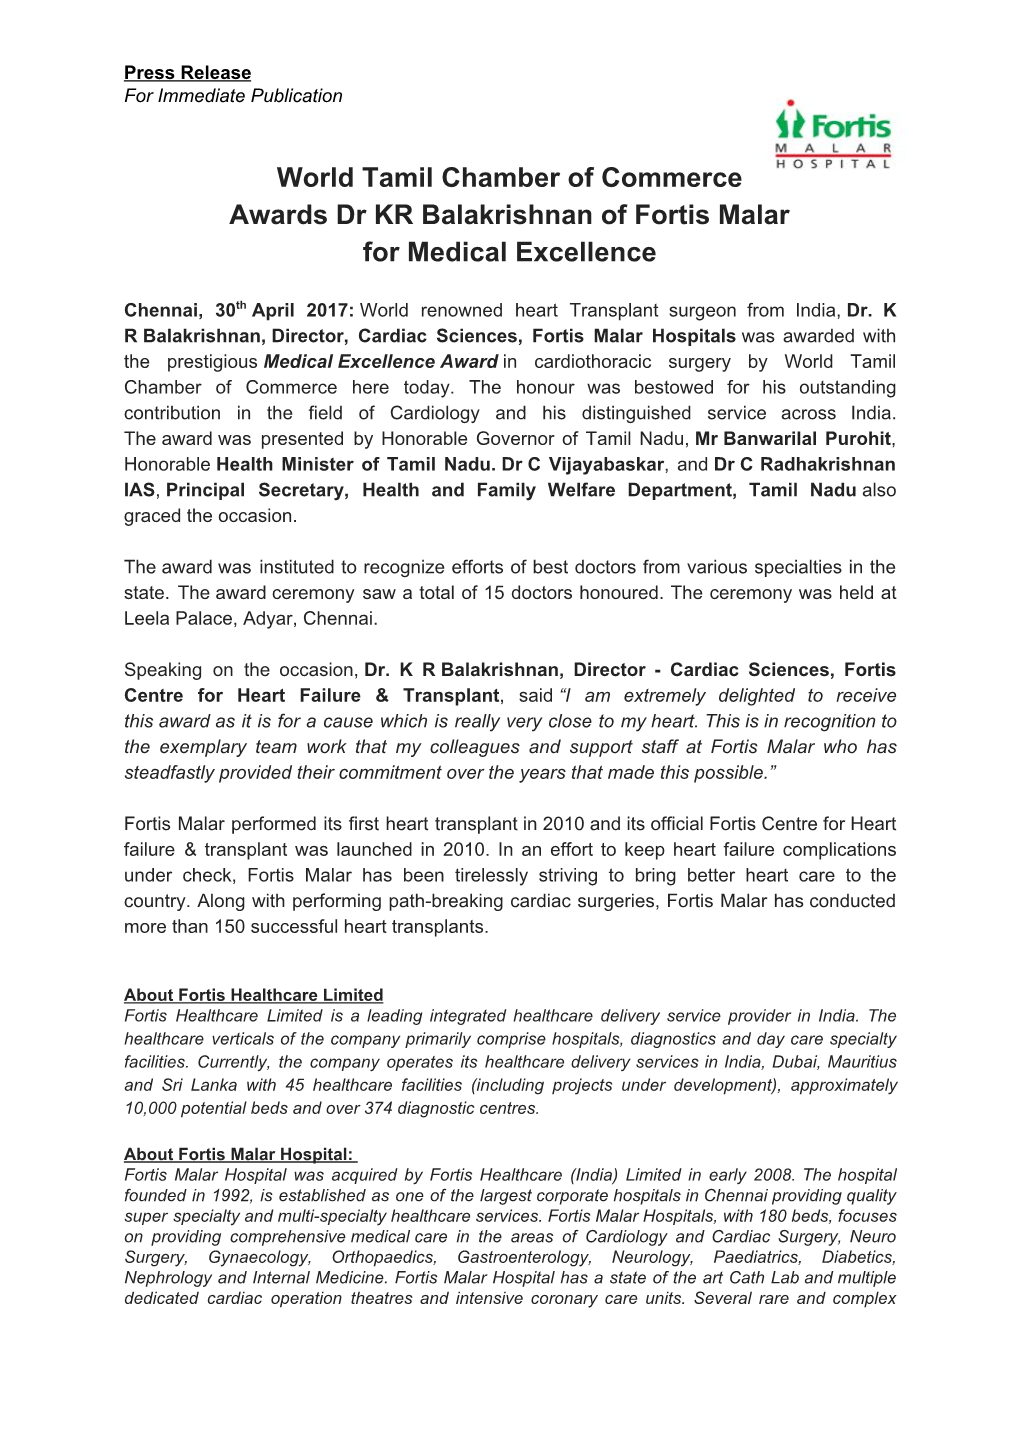 World Tamil Chamber of Commerce Awards Dr KR Balakrishnan of Fortis Malar for Medical Excellence